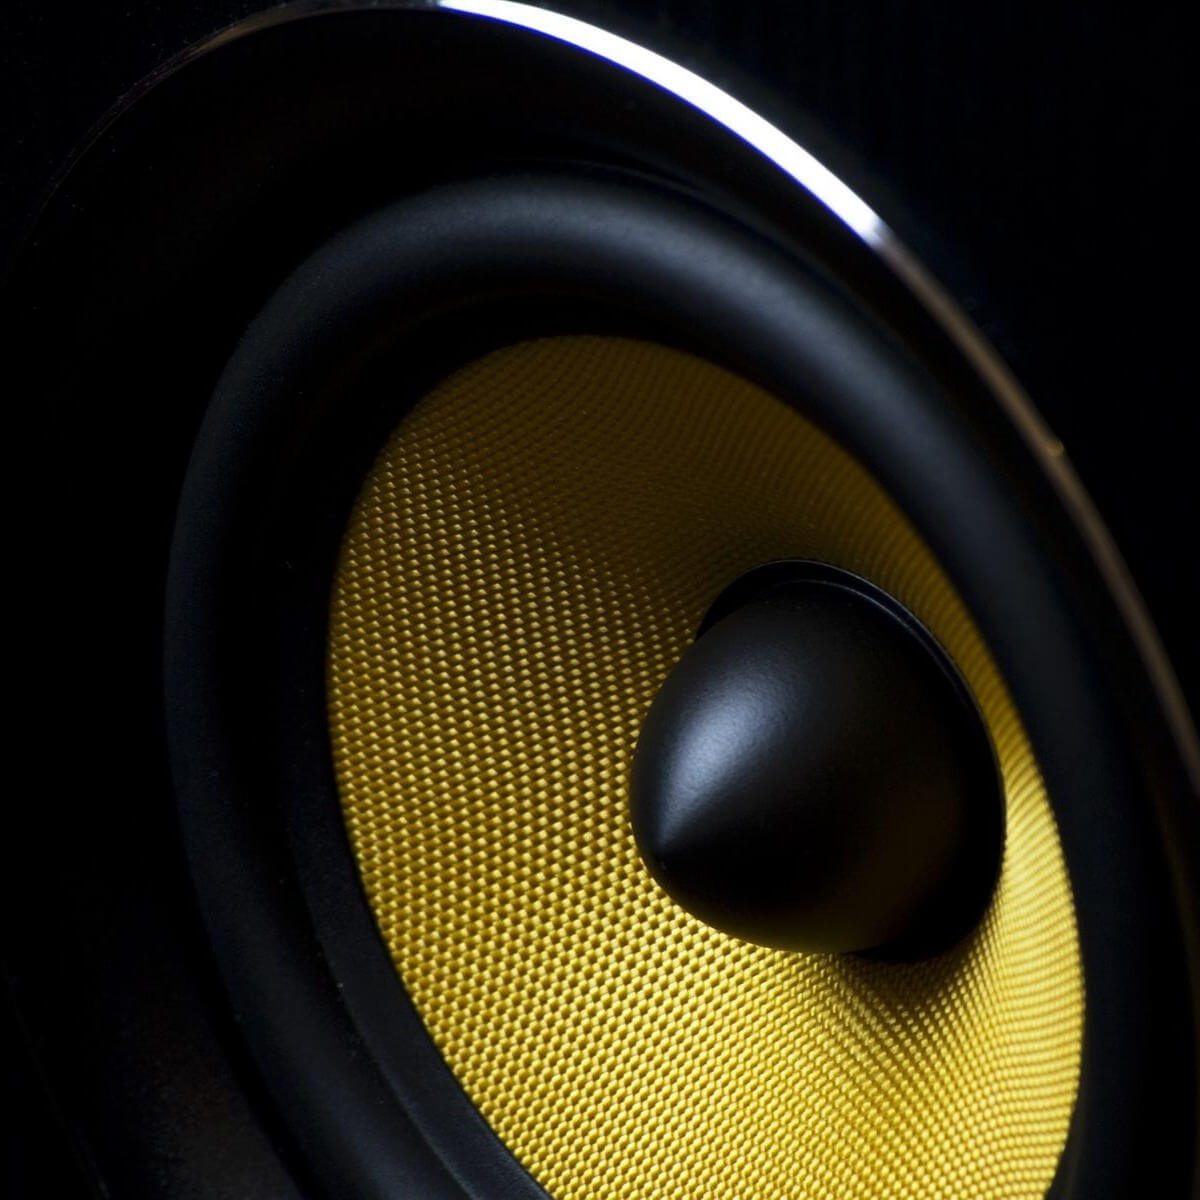 Black friday smart speakers - speaker close-up